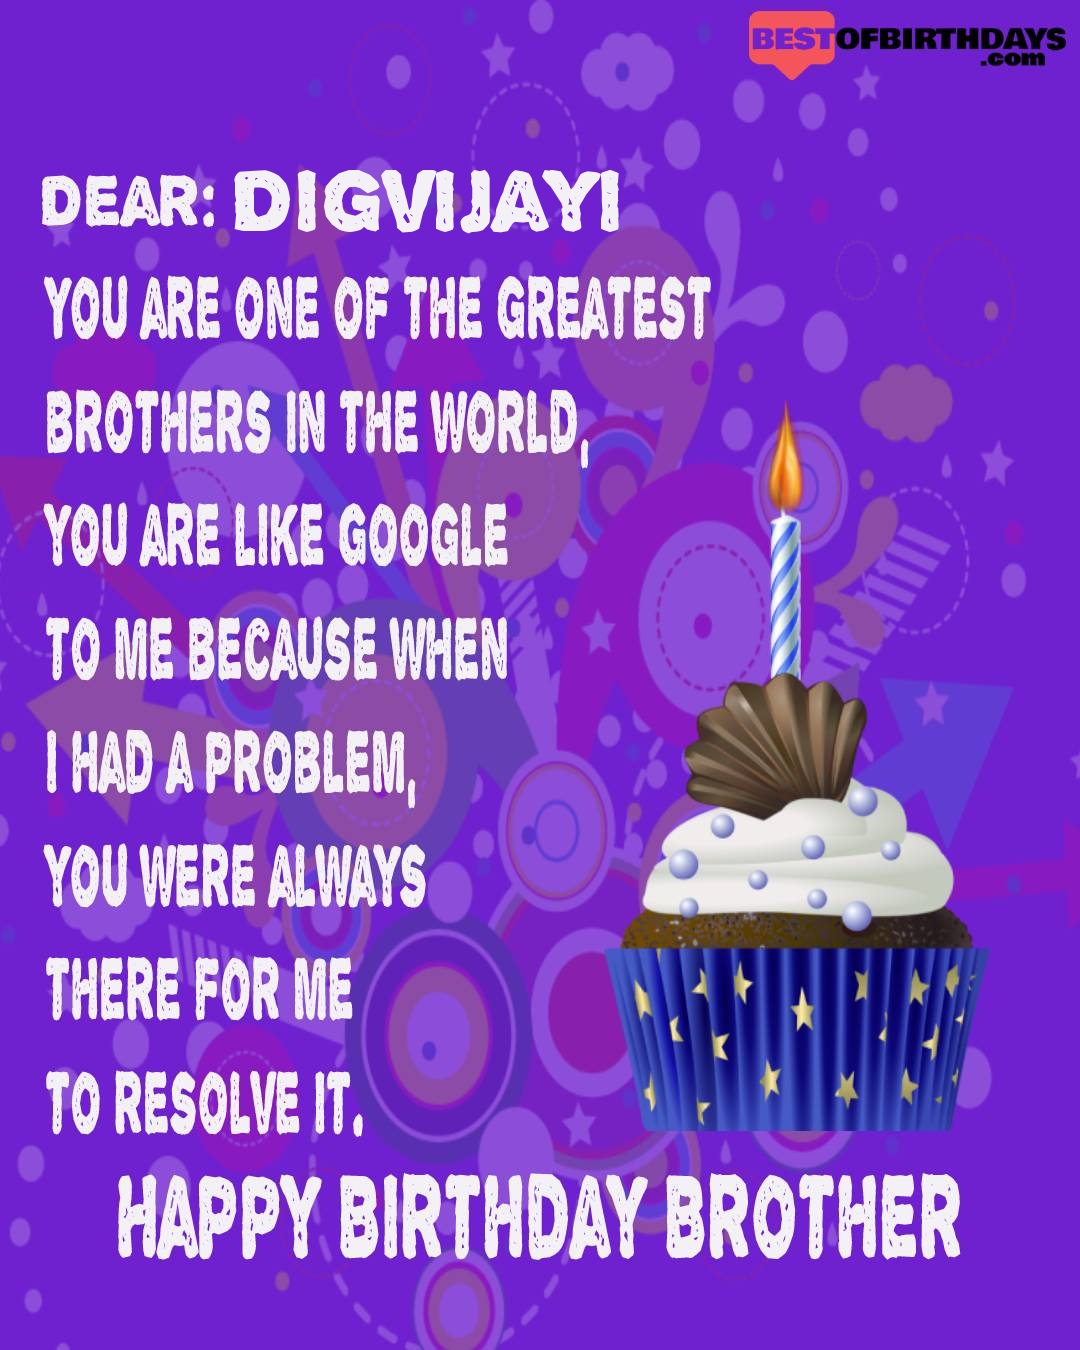 Happy birthday digvijayi bhai brother bro